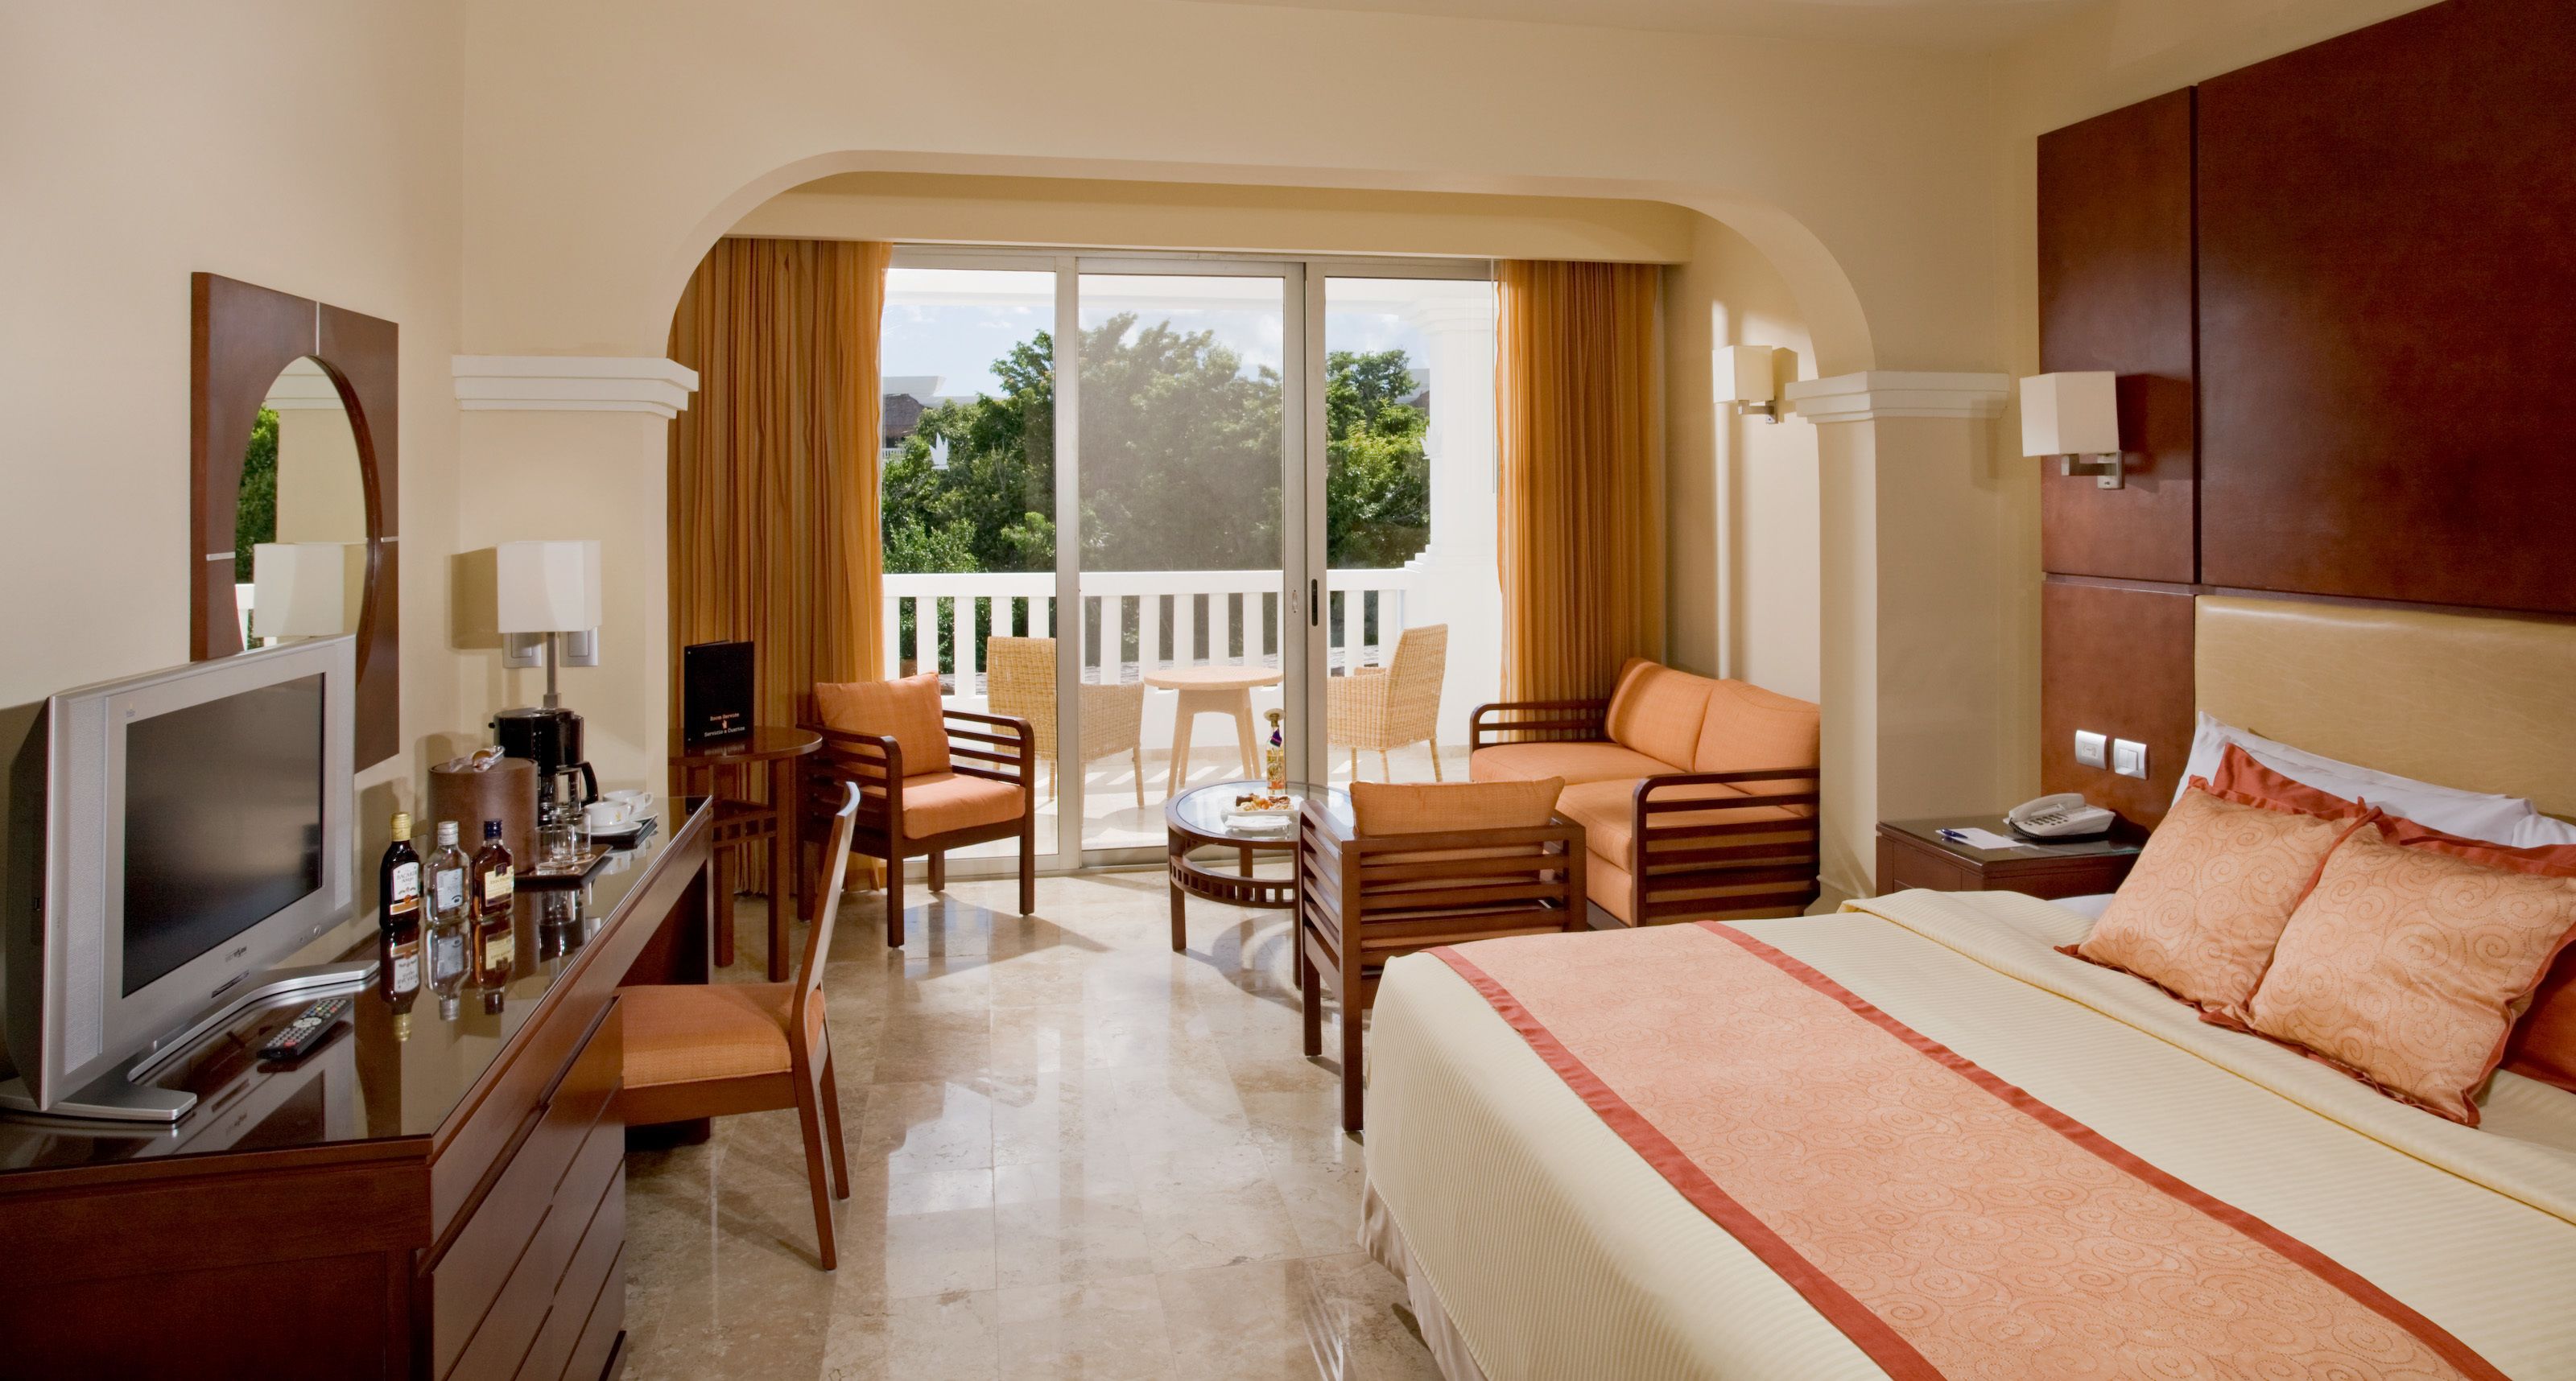 Grand Riviera Princess All Suites & Spa Resort